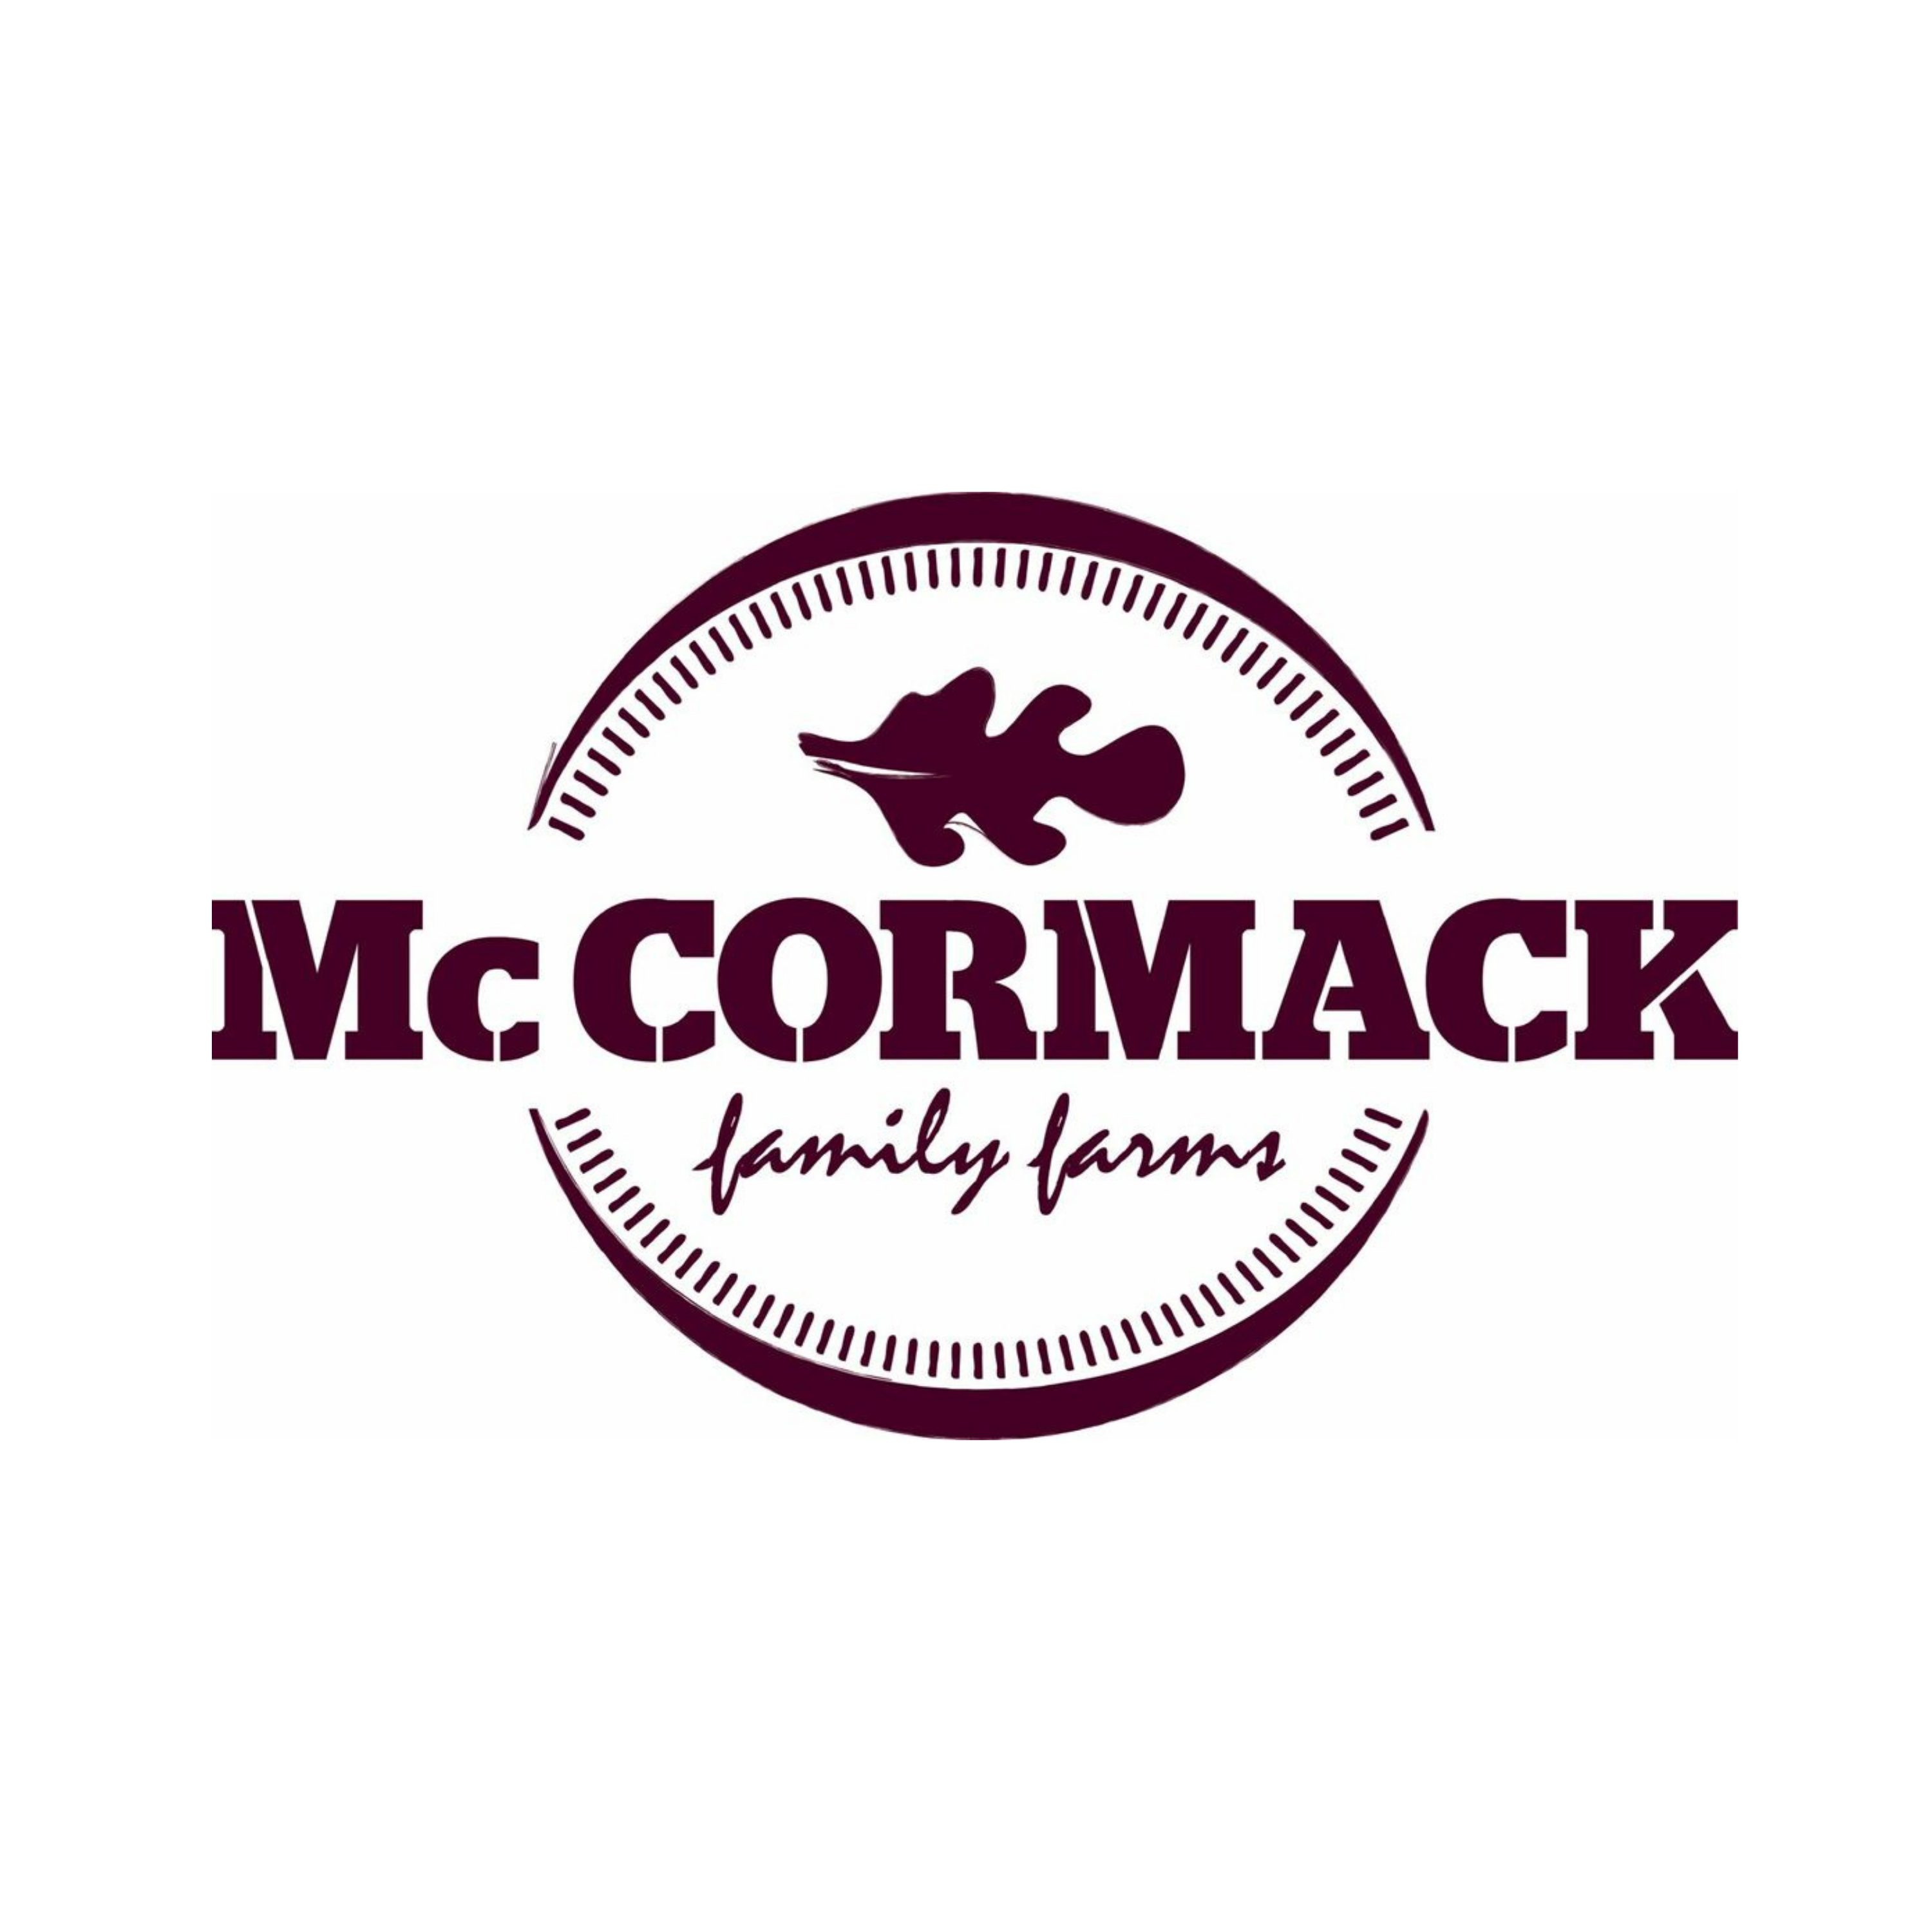 Image of McCormack Family Farms logotype